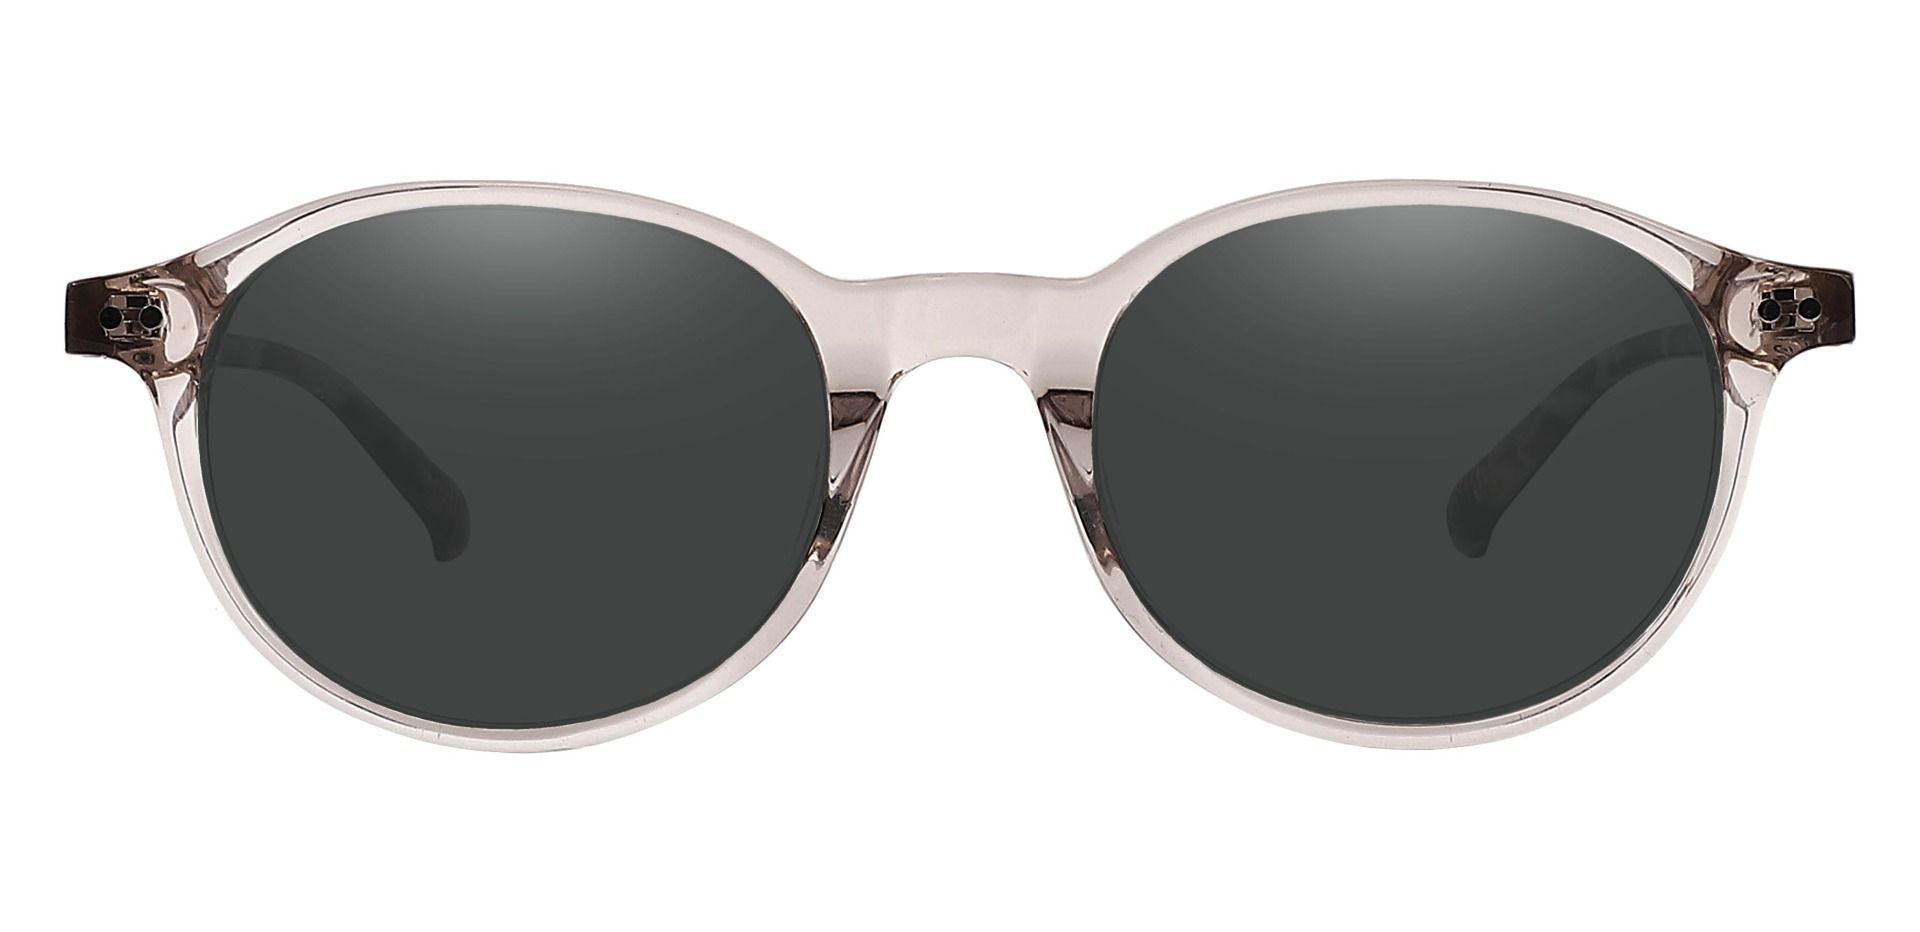 Avon Oval Prescription Sunglasses - Clear Frame With Gray Lenses